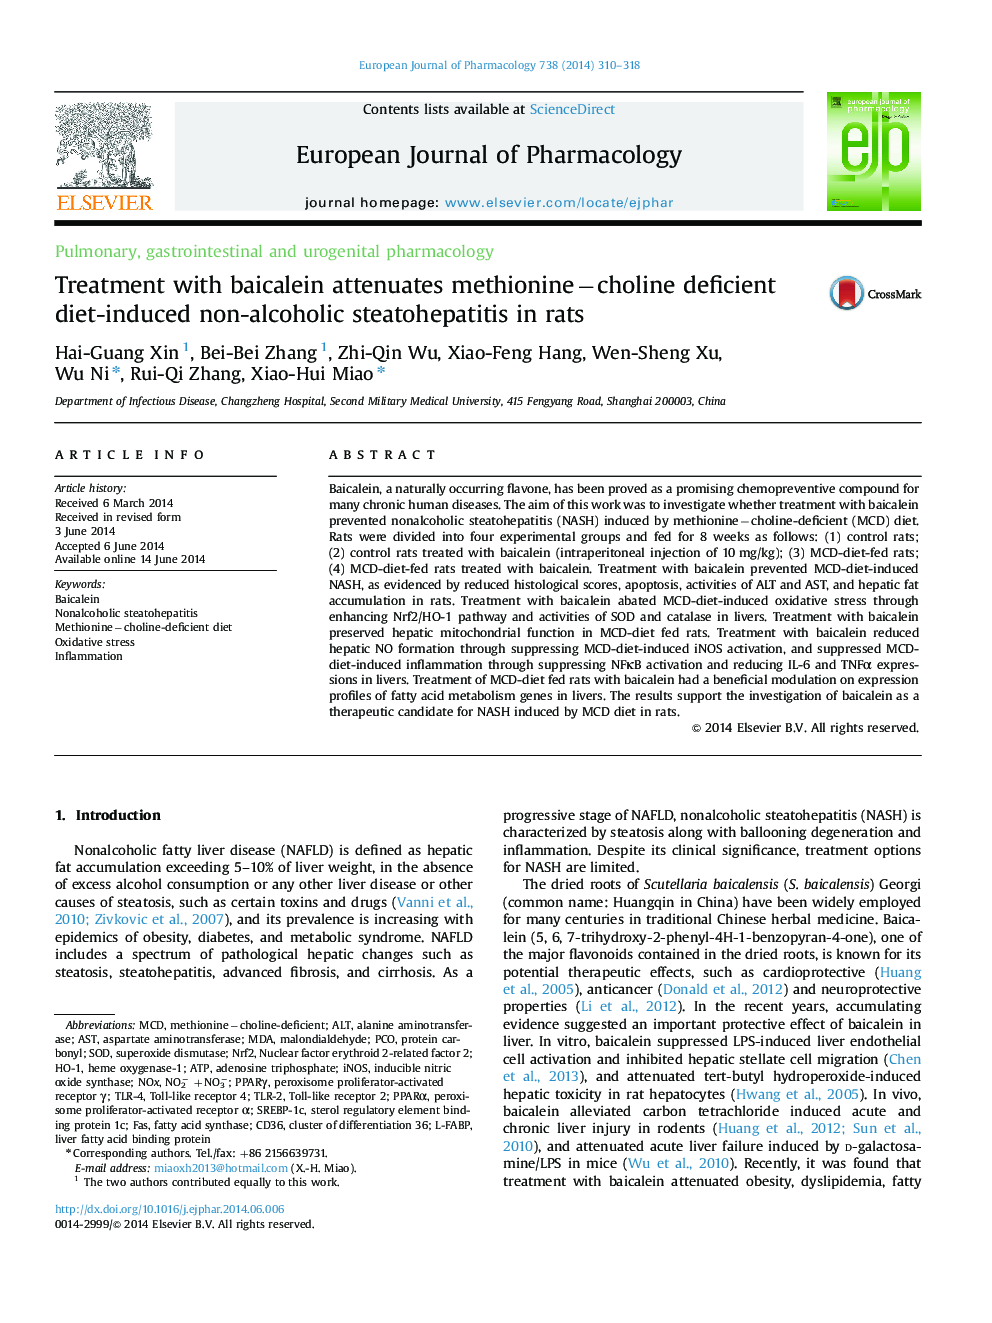 Pulmonary, gastrointestinal and urogenital pharmacologyTreatment with baicalein attenuates methionineâcholine deficient diet-induced non-alcoholic steatohepatitis in rats